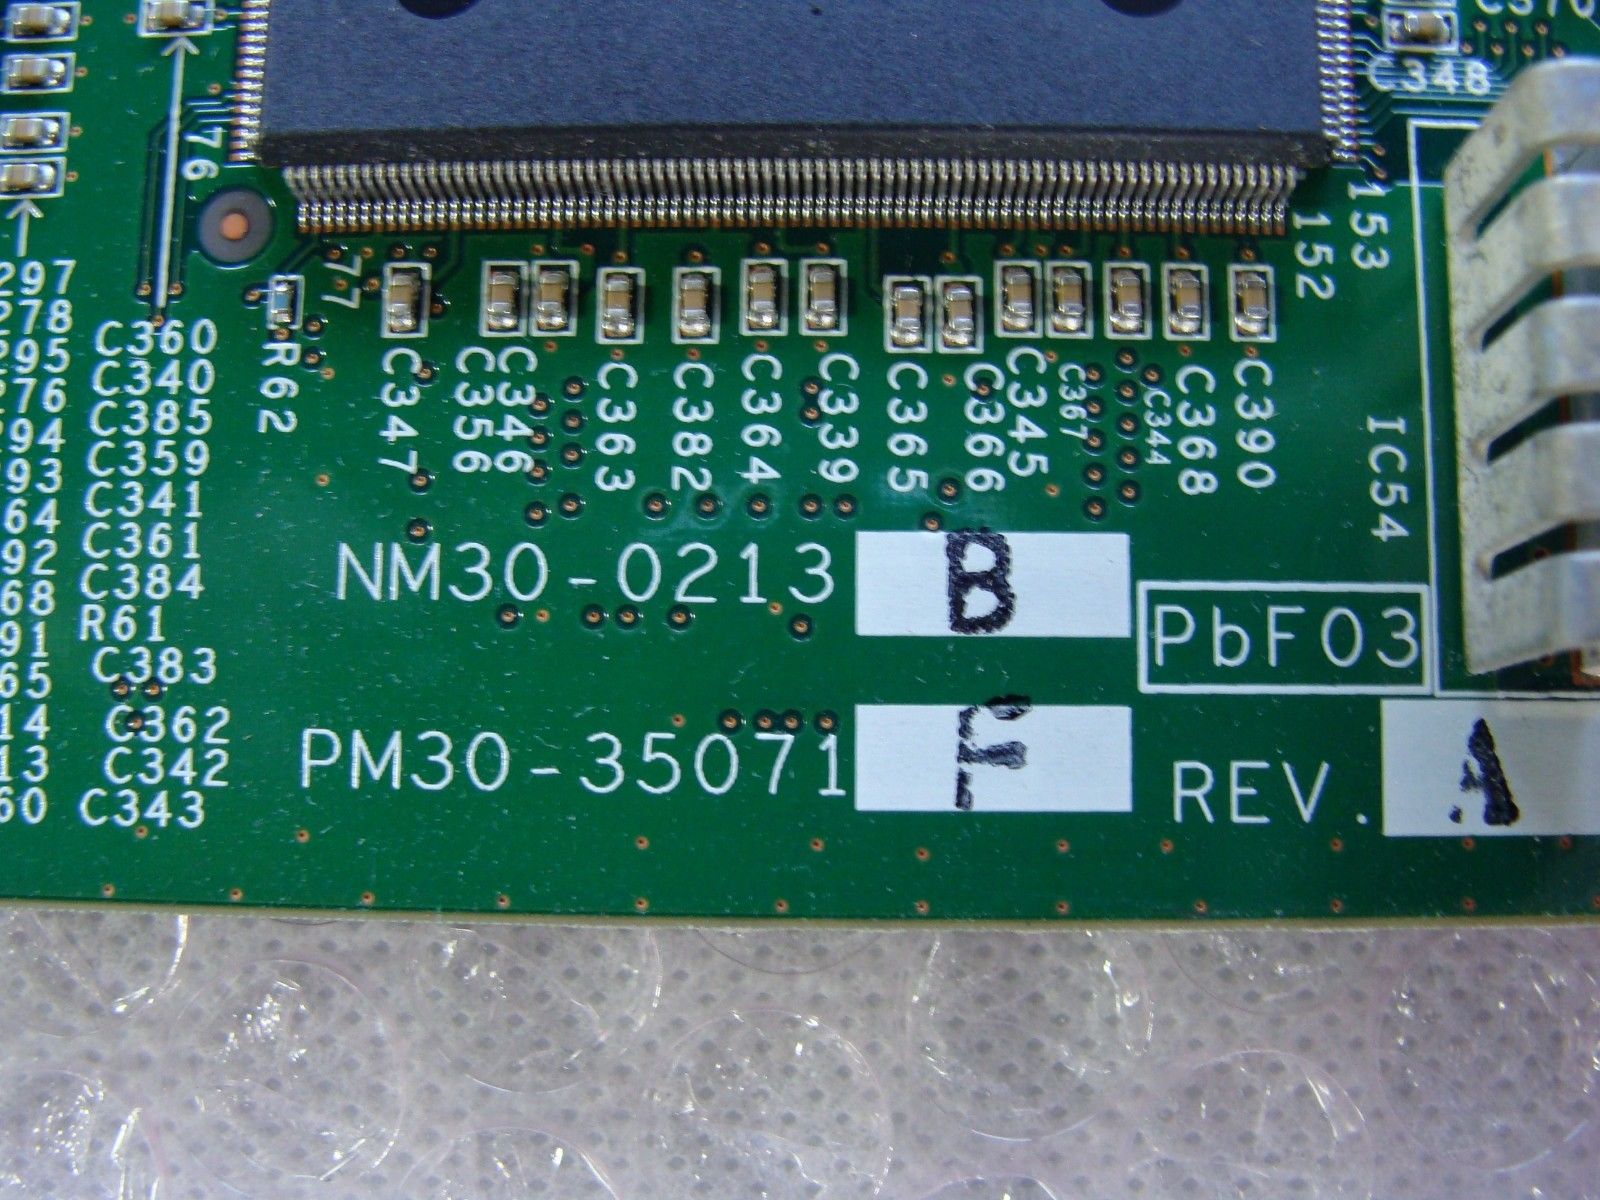 PM30-35071 F YWP4821 A BSM31-4432 TOSHIBA APLIO XG SSA-790A ULTRASOUND BOARD DIAGNOSTIC ULTRASOUND MACHINES FOR SALE